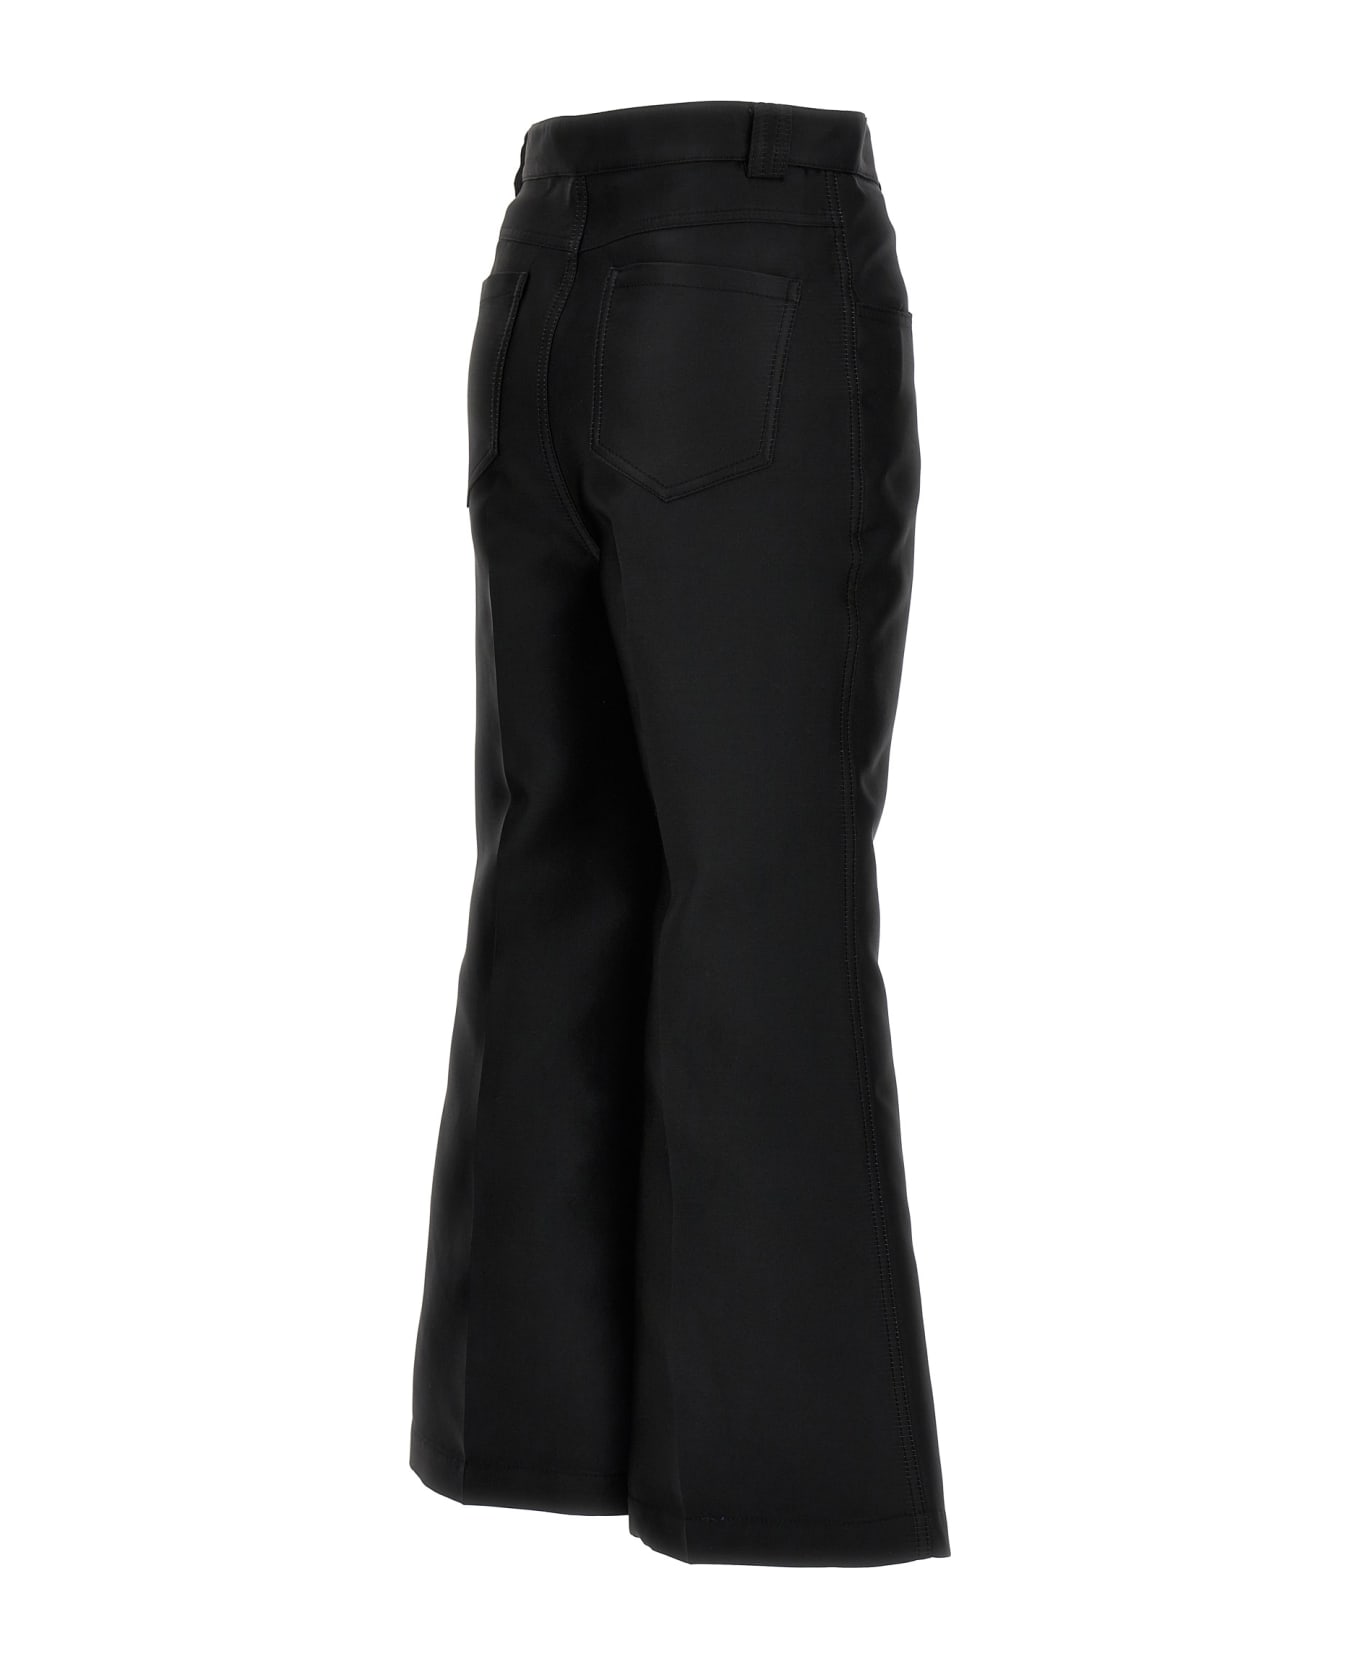 Giambattista Valli Cropped Silk Blend Pants - Black  